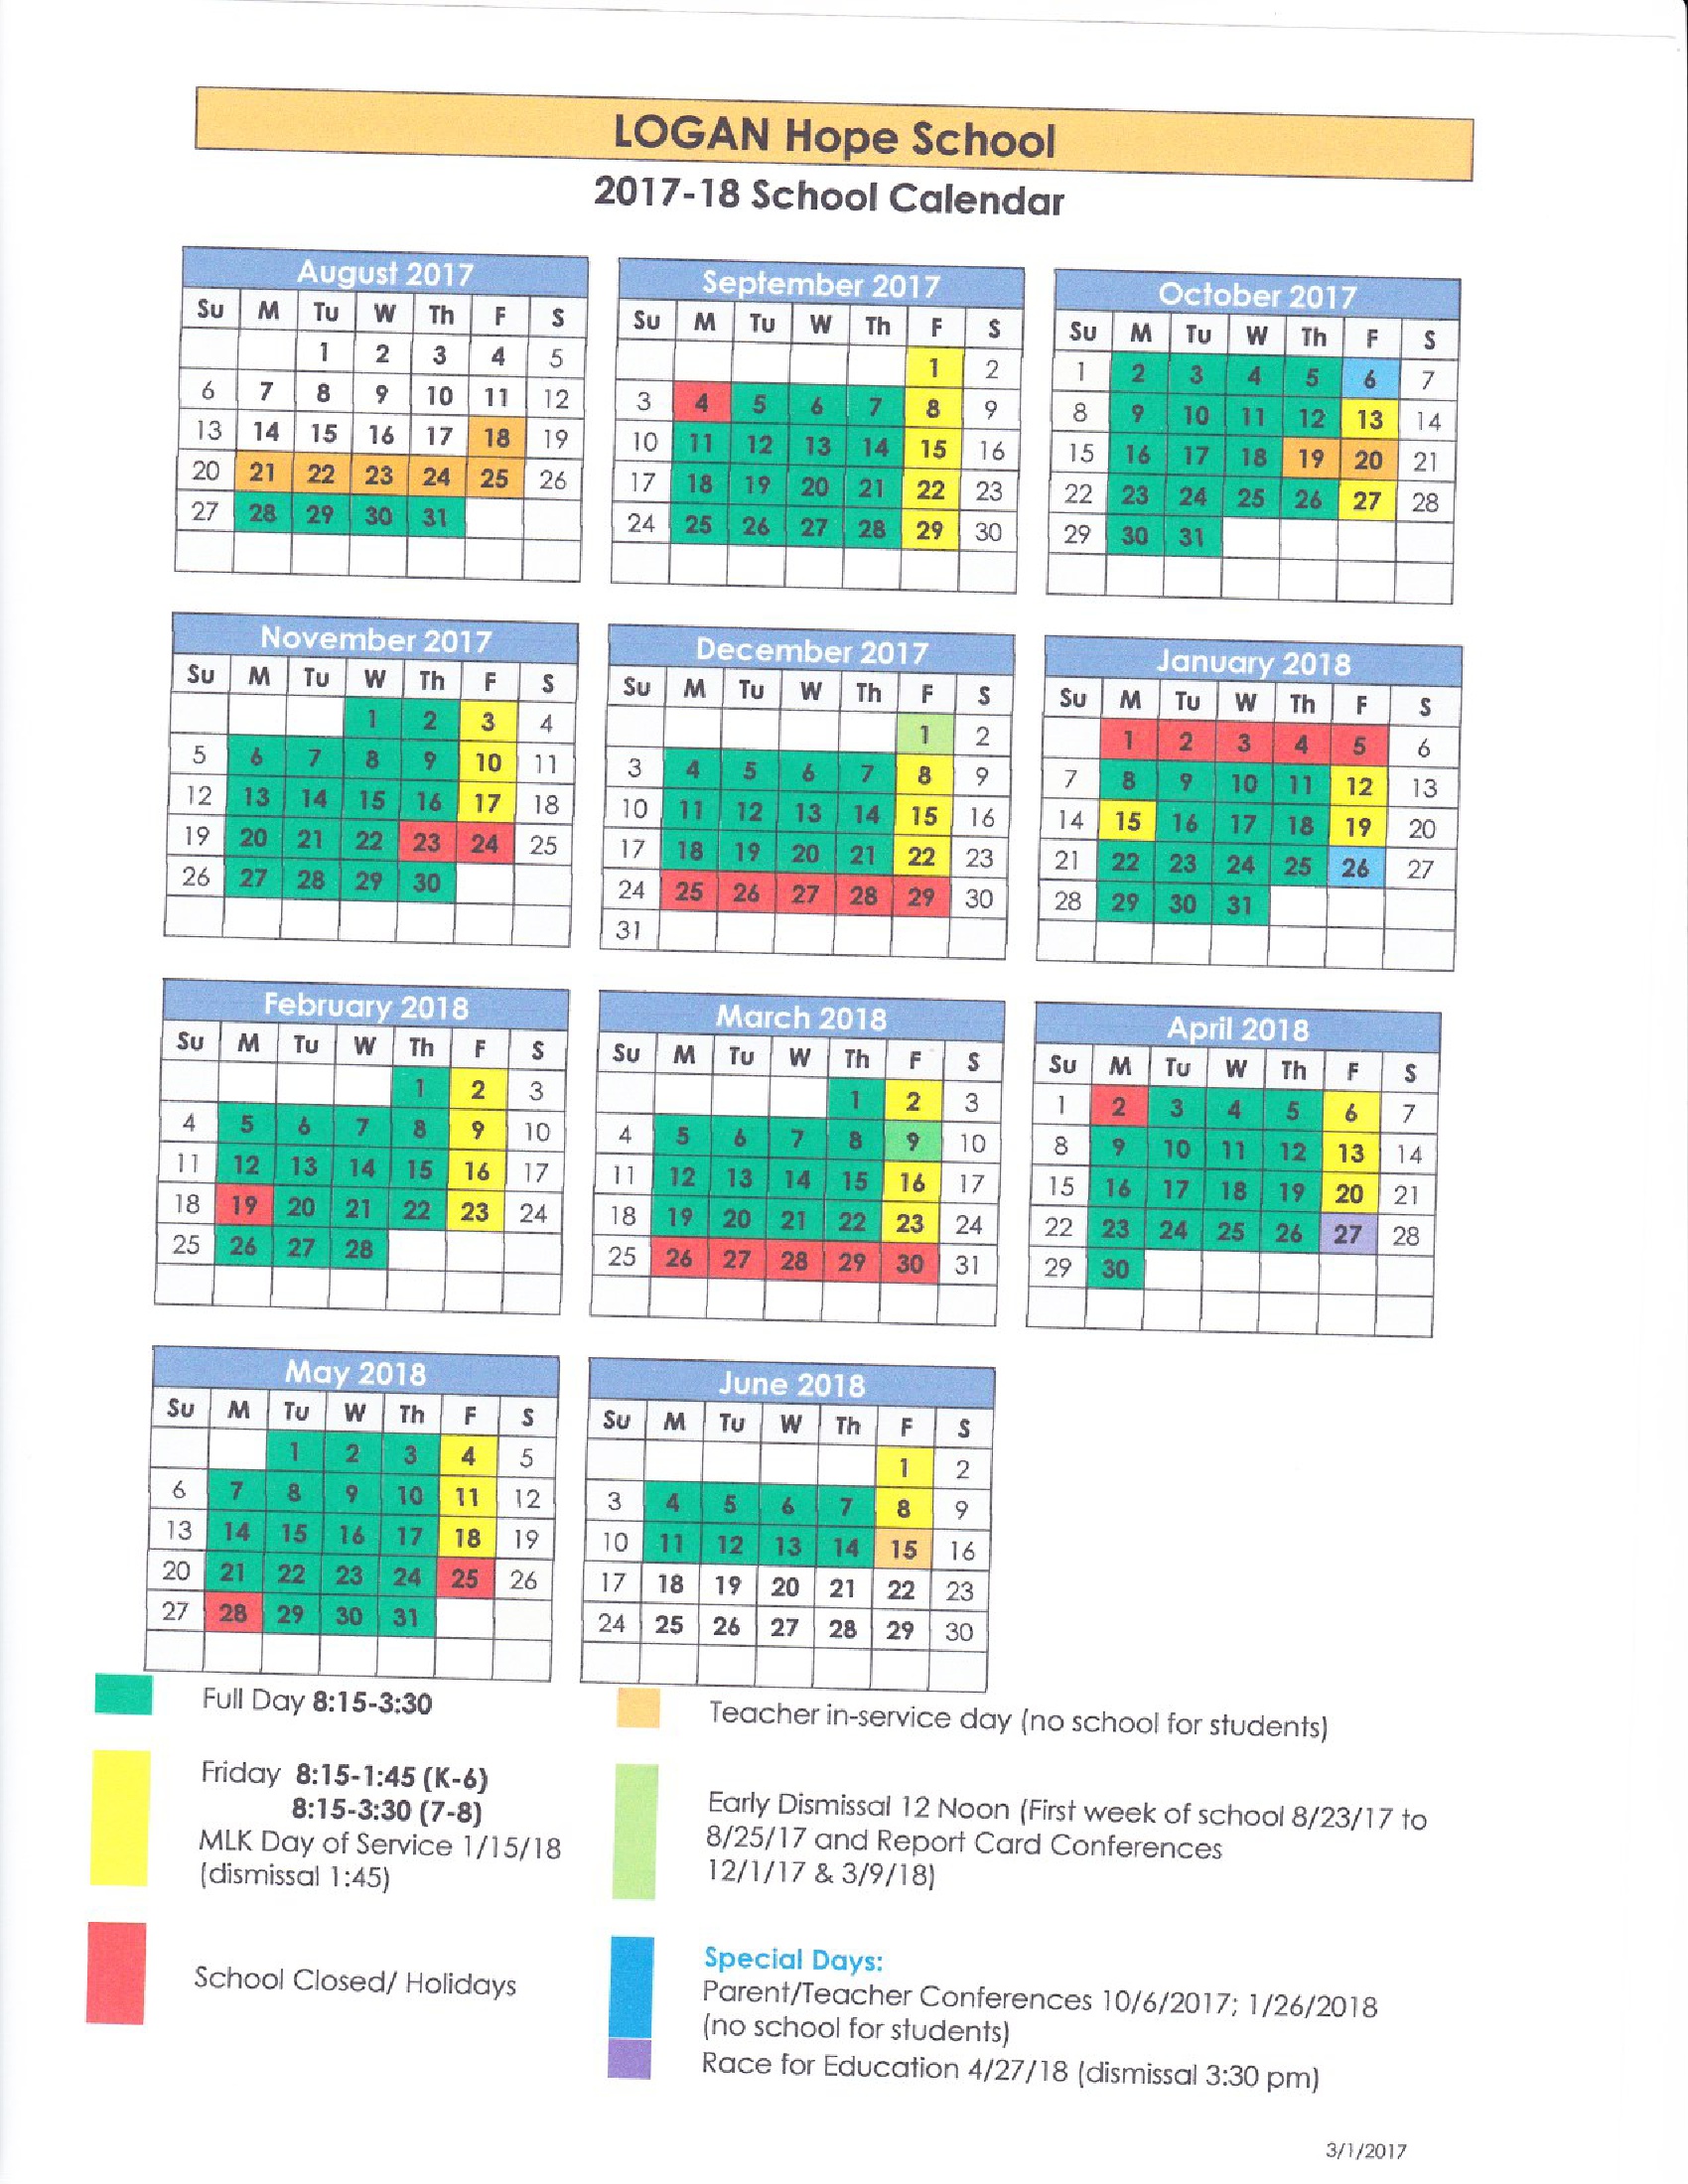 School Calendar and Parent Updates LOGAN Hope School